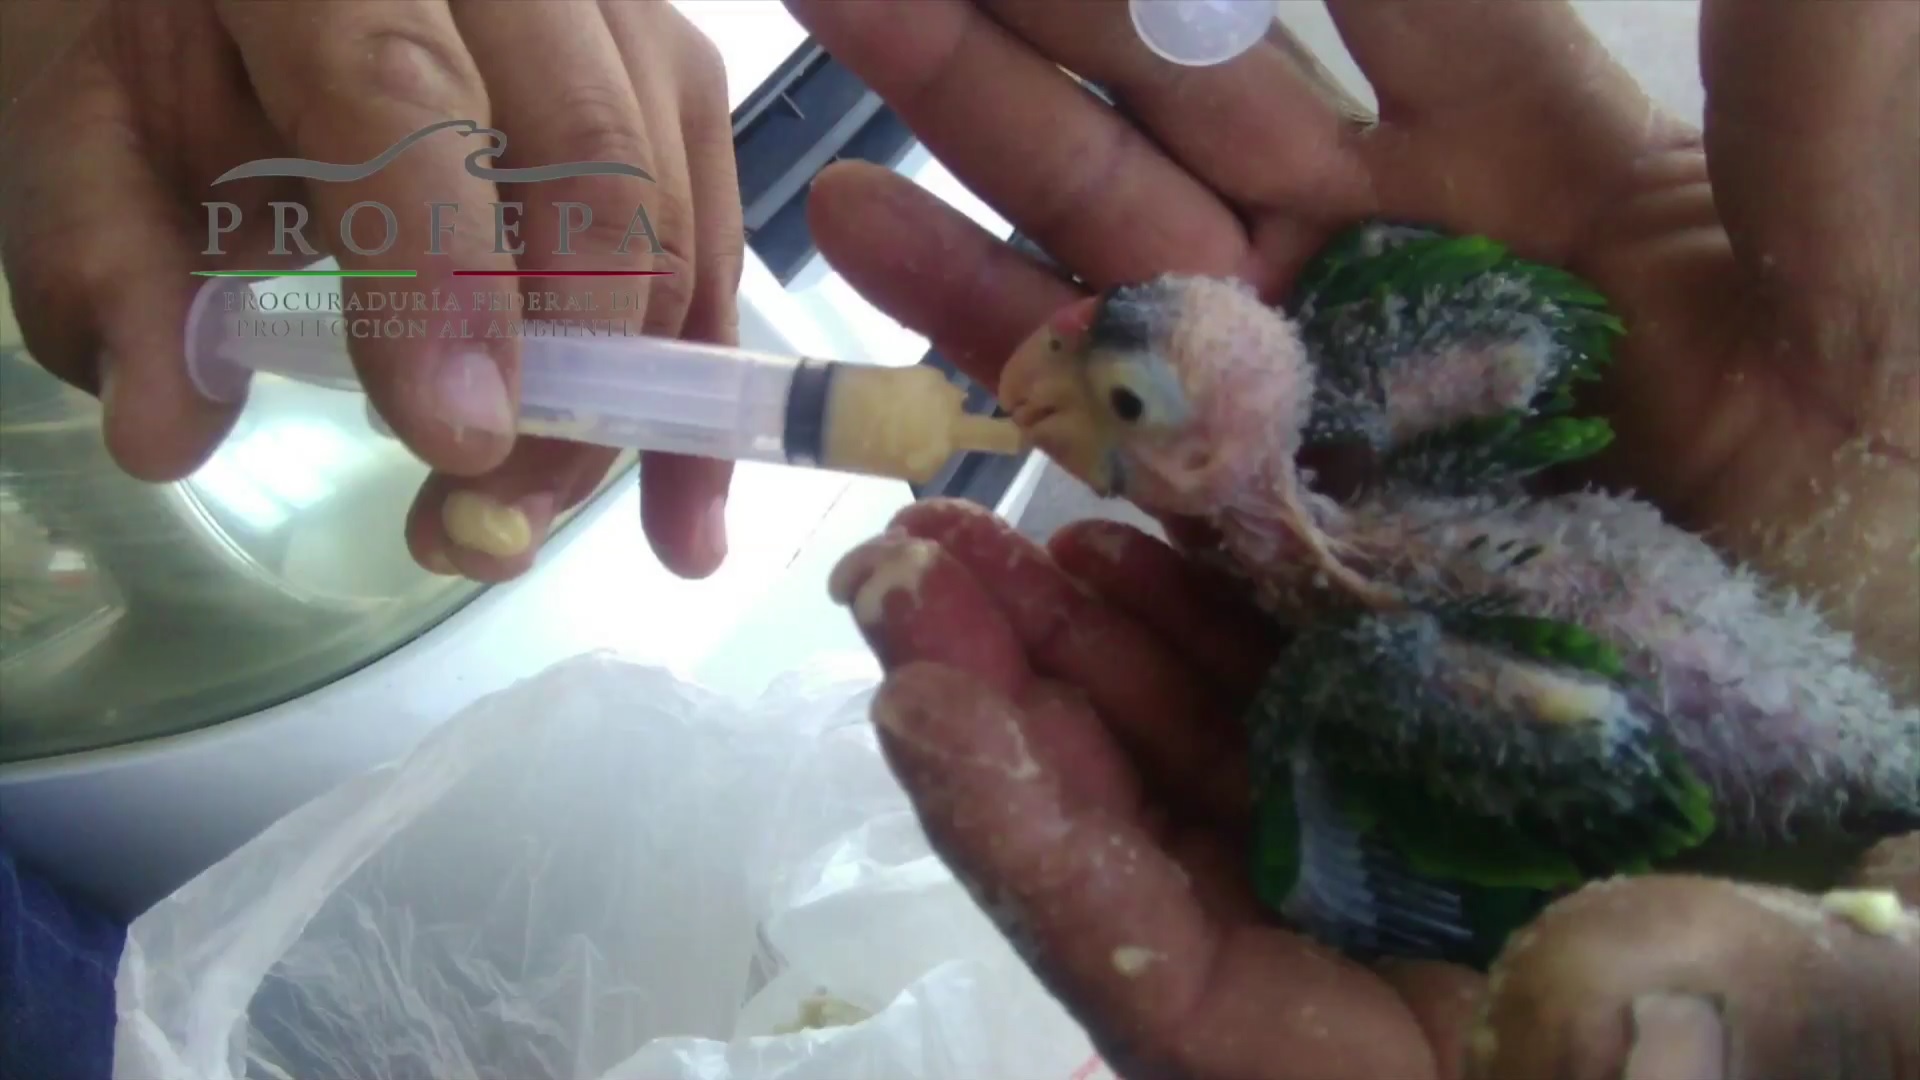 Personal de la Profepa atiende ave silvestre que fue abandonada en Baja California (Profepa)